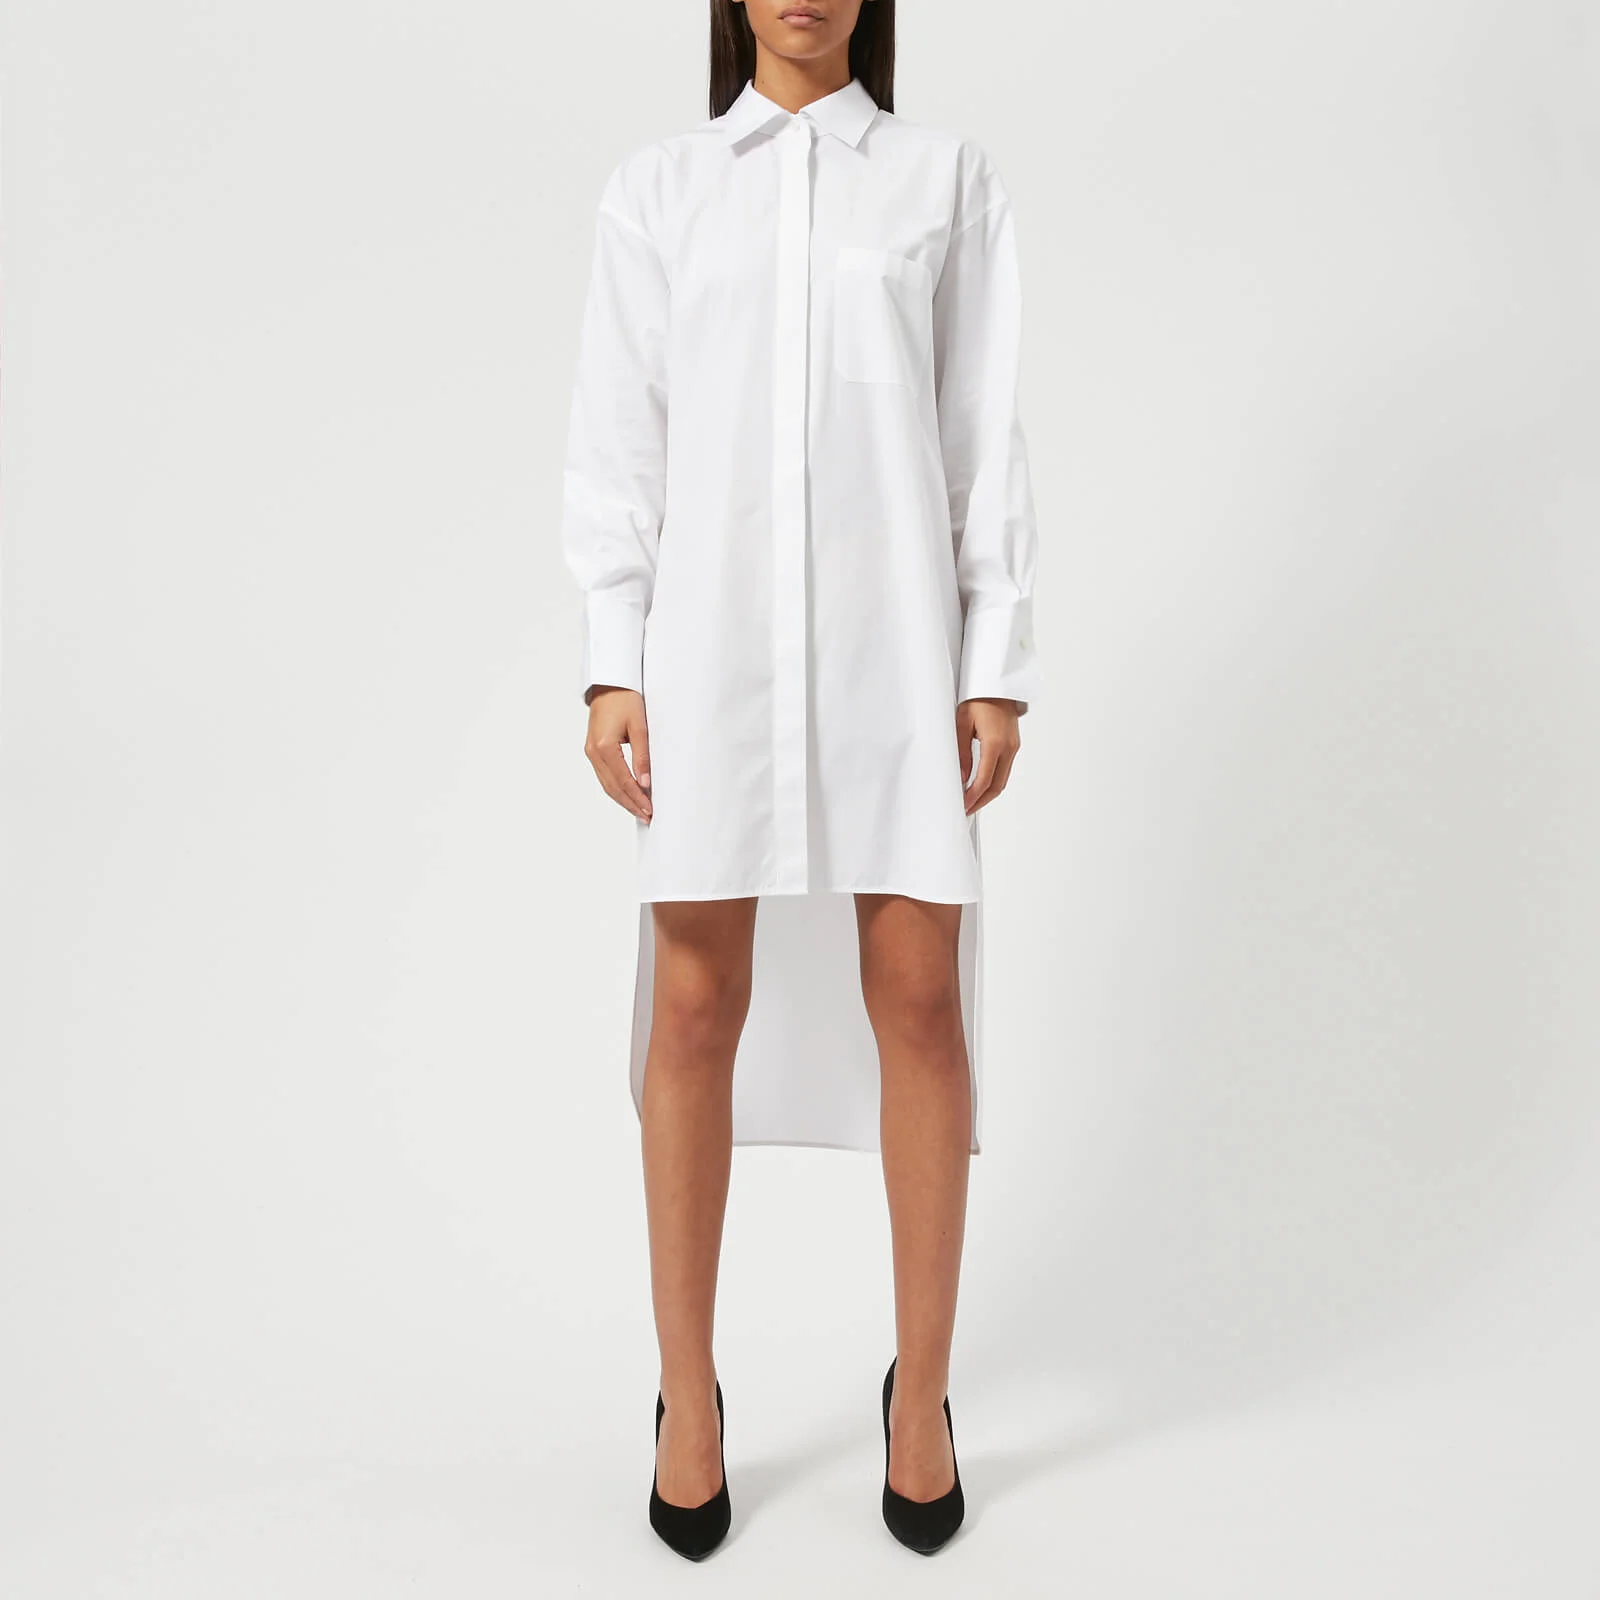 Helmut Lang Women's Open Pocket Shirt Dress - Bright White Image 1